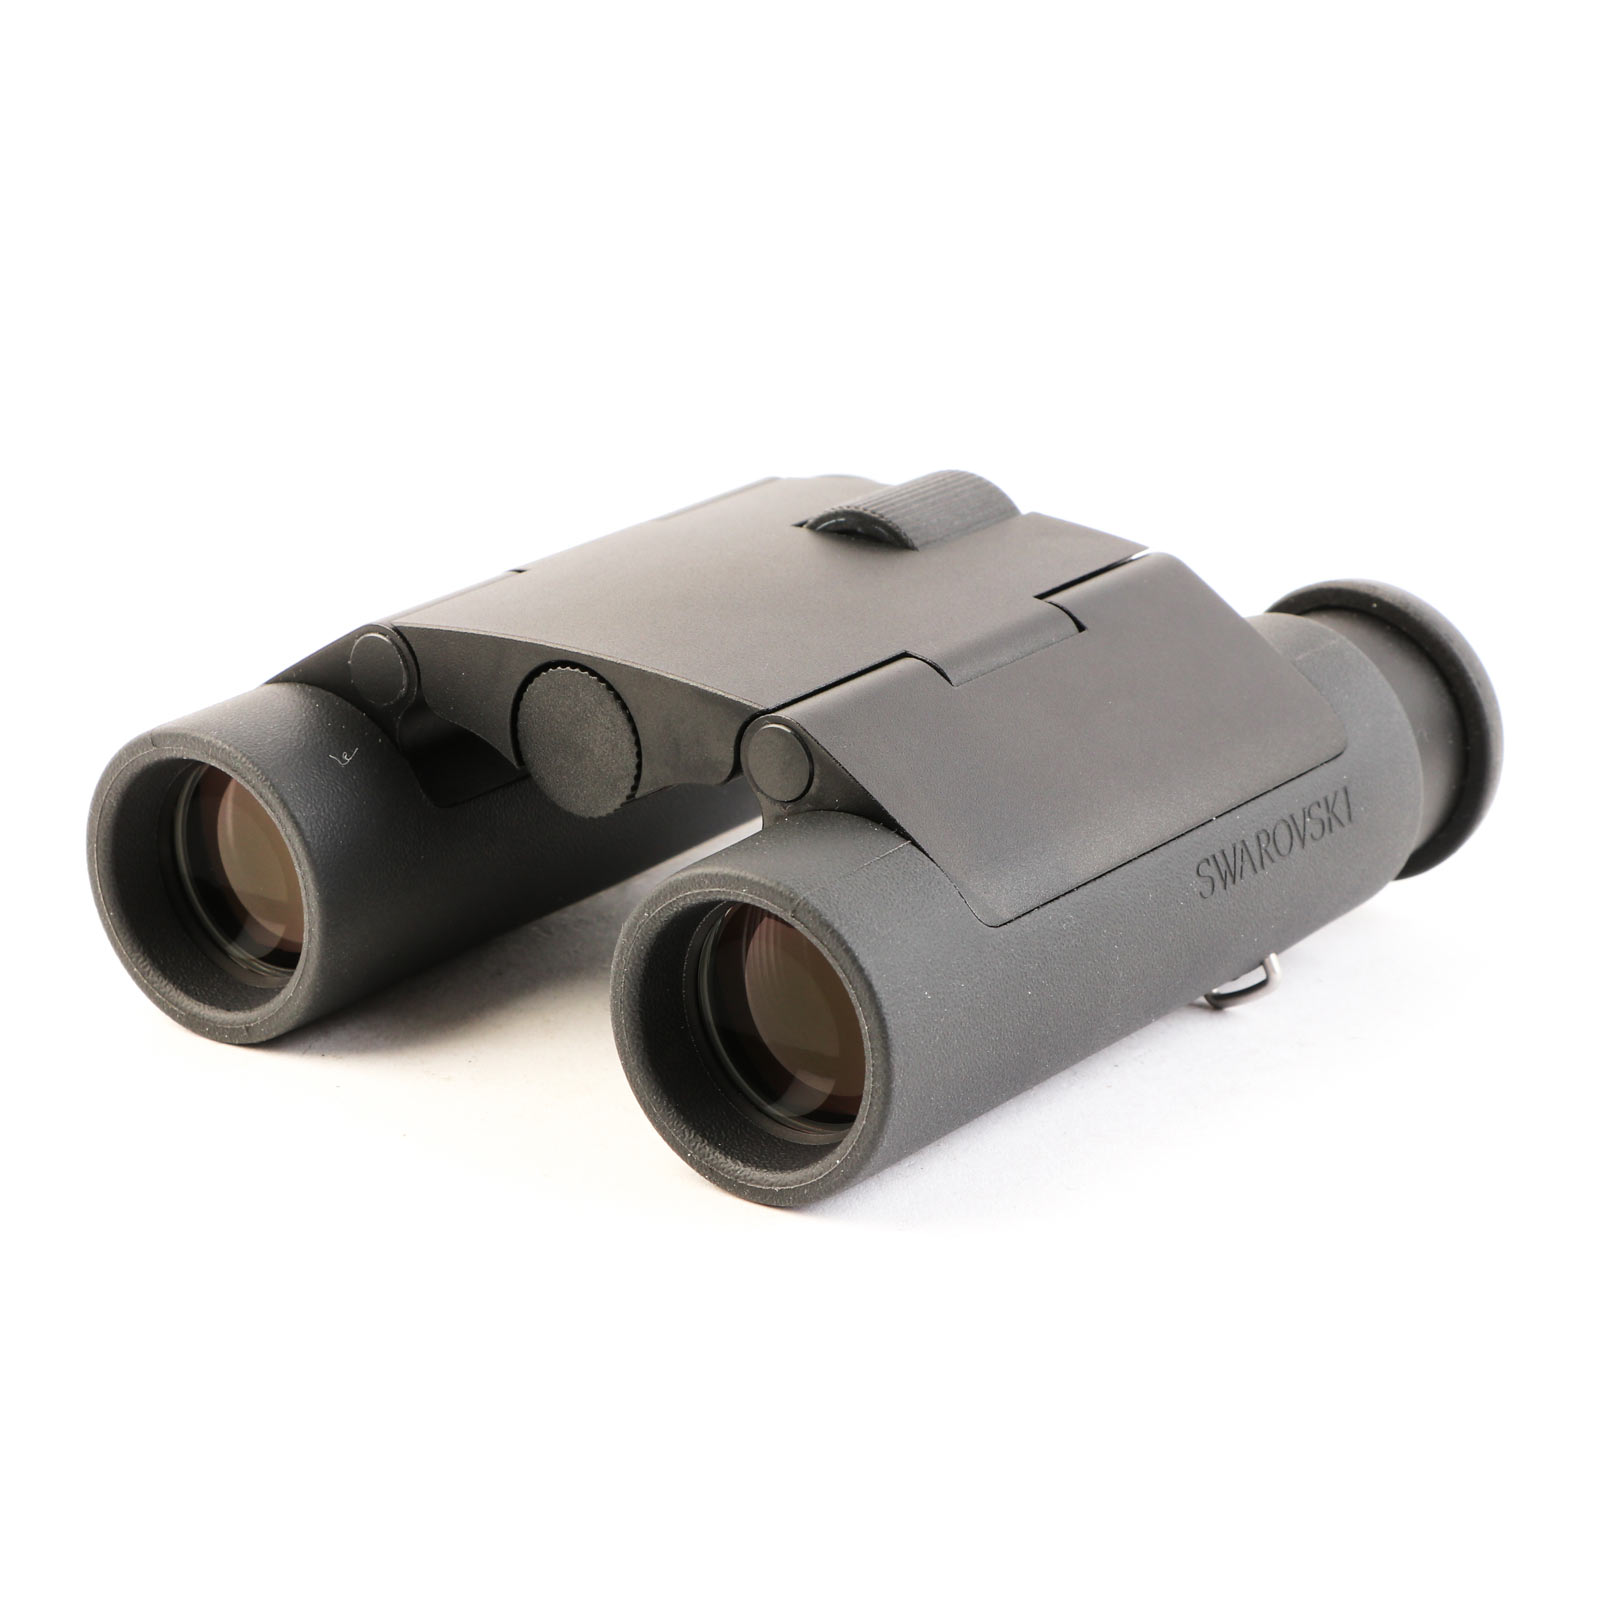 USED Swarovski CL Curio 7x21 Binoculars - Black